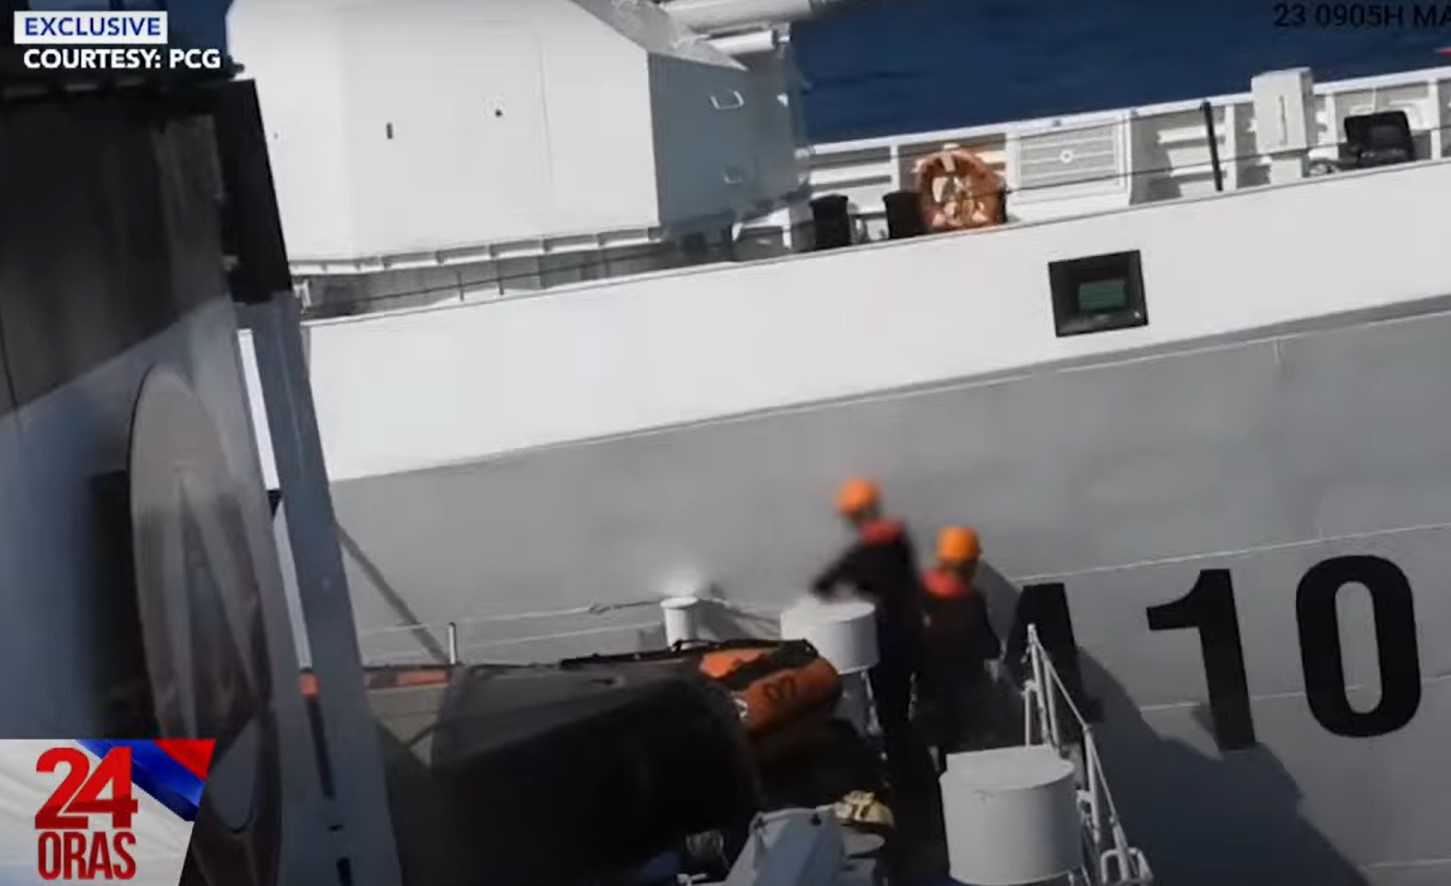 PCG vessel hits China coast guard ship that blocked its path